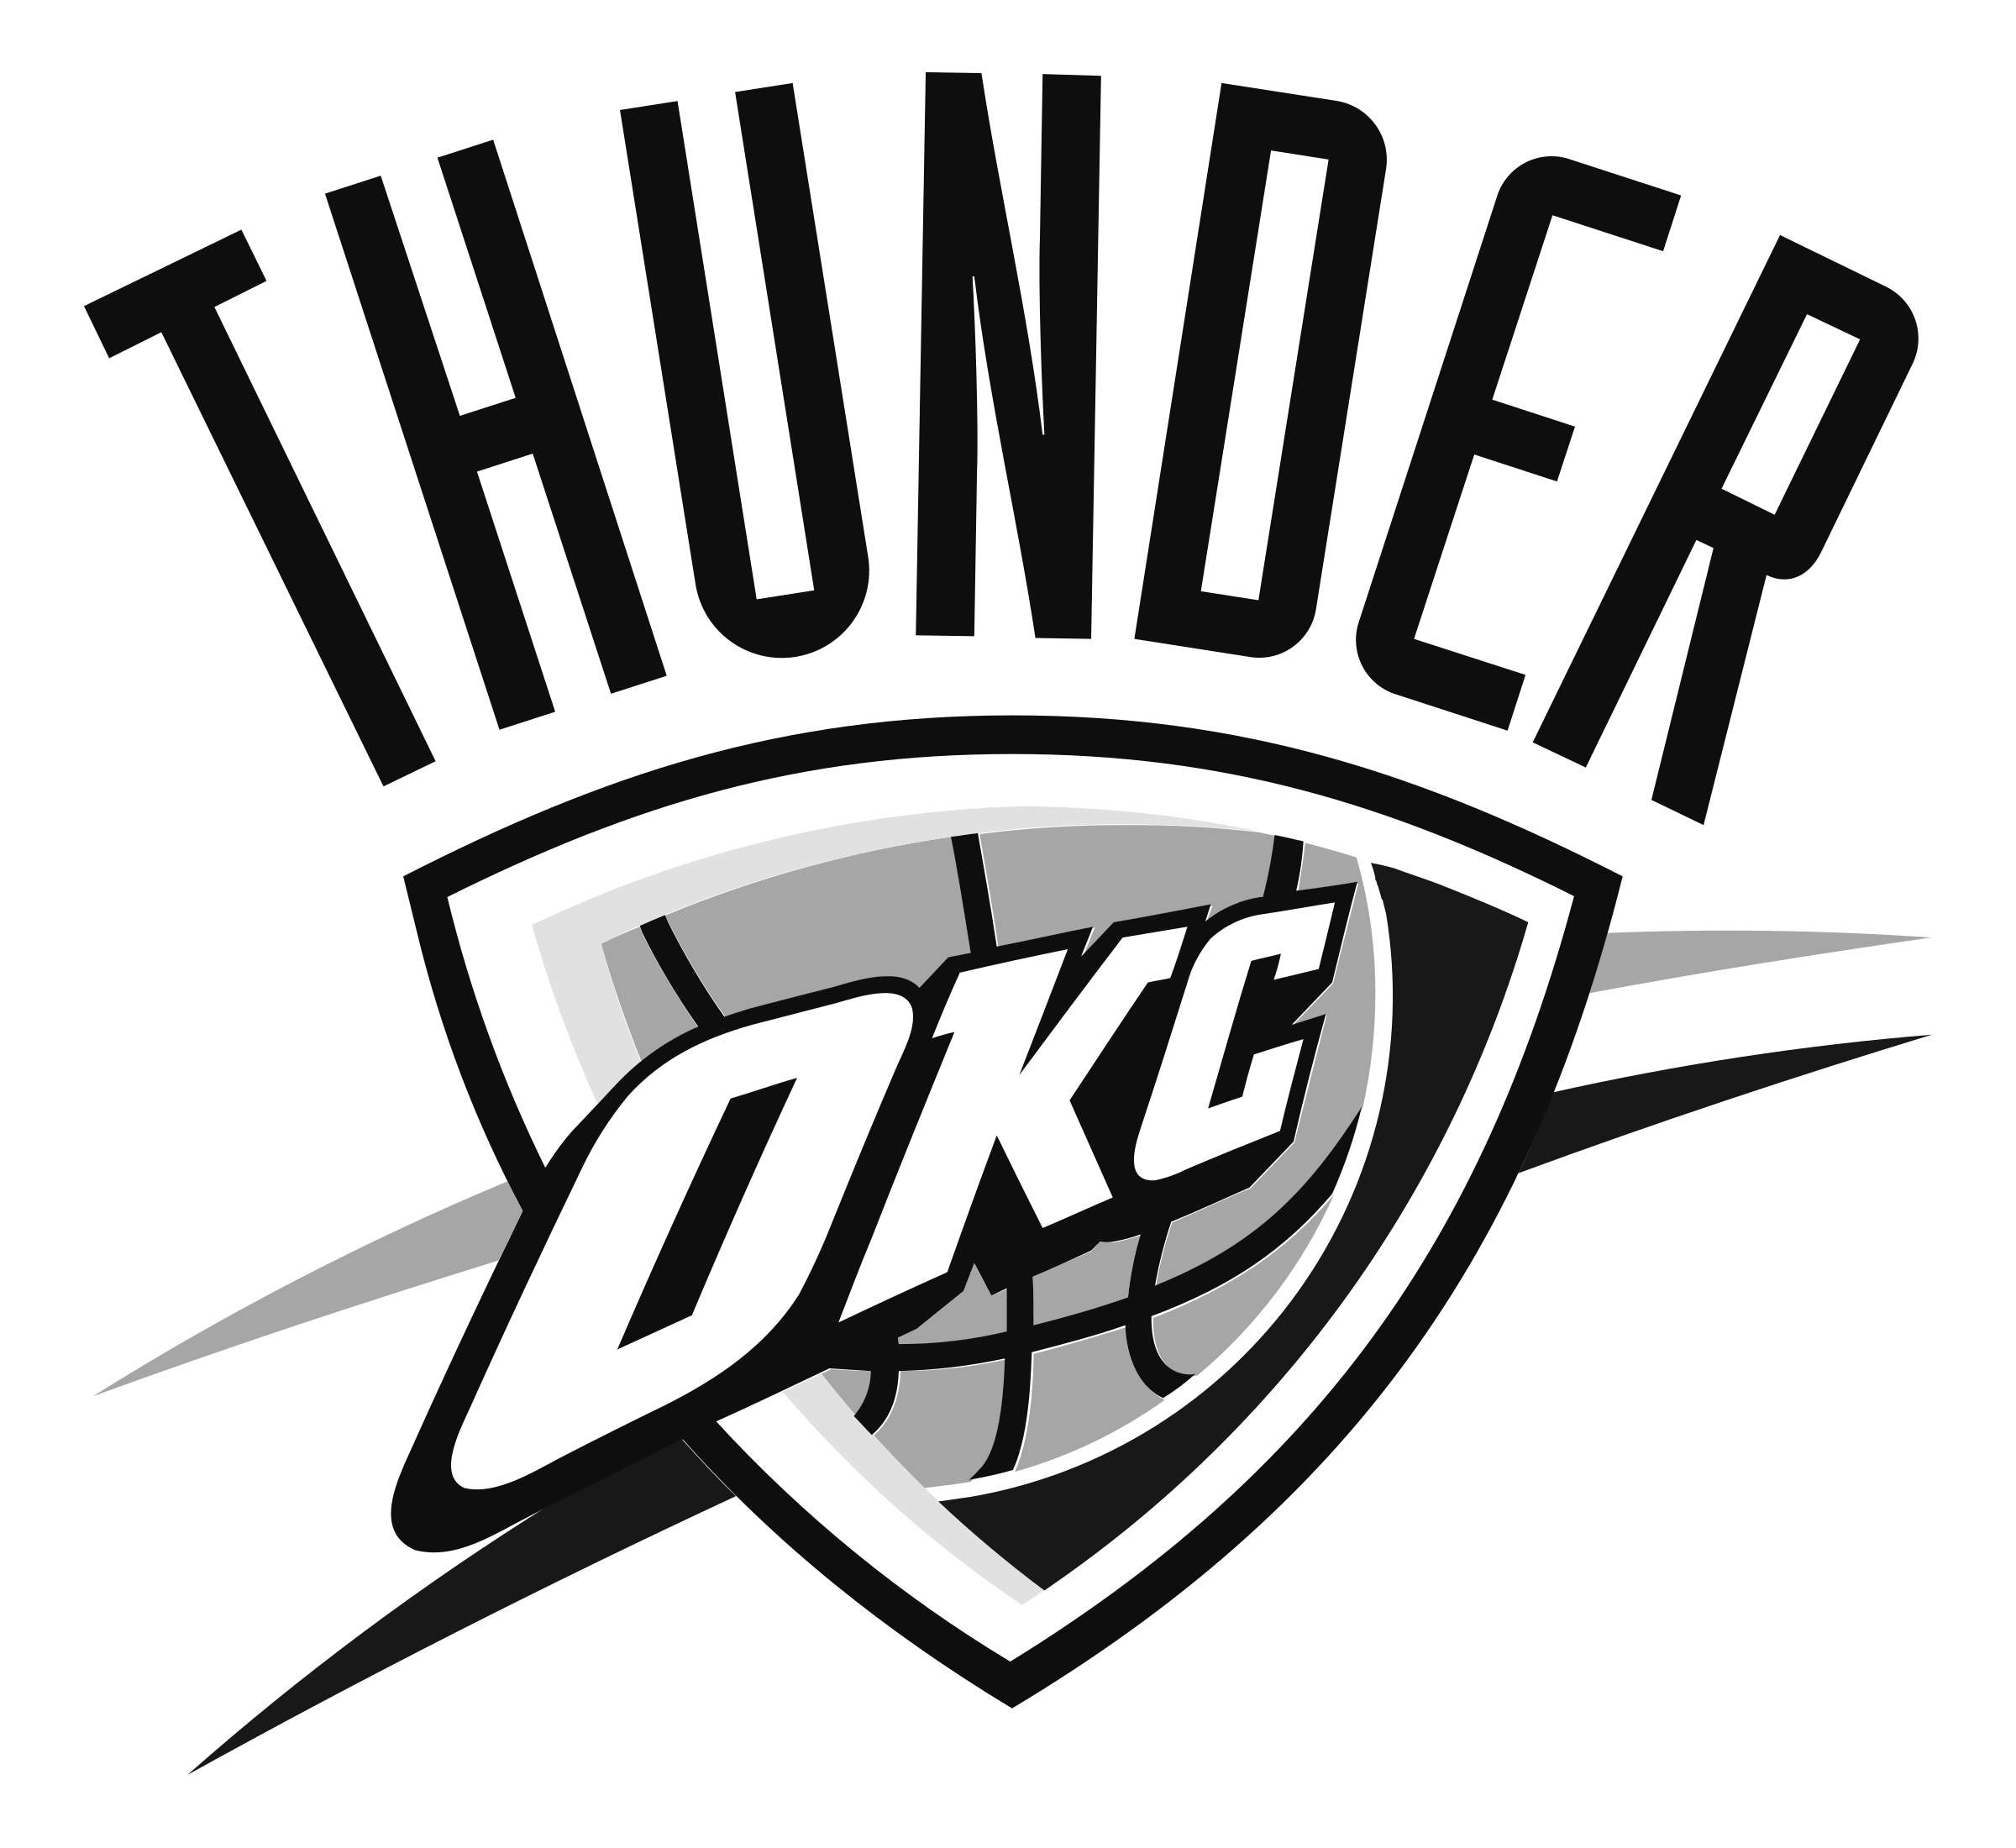 OKC Logo - Oklahoma City Thunder Logo PNG Transparent & SVG Vector - Freebie Supply